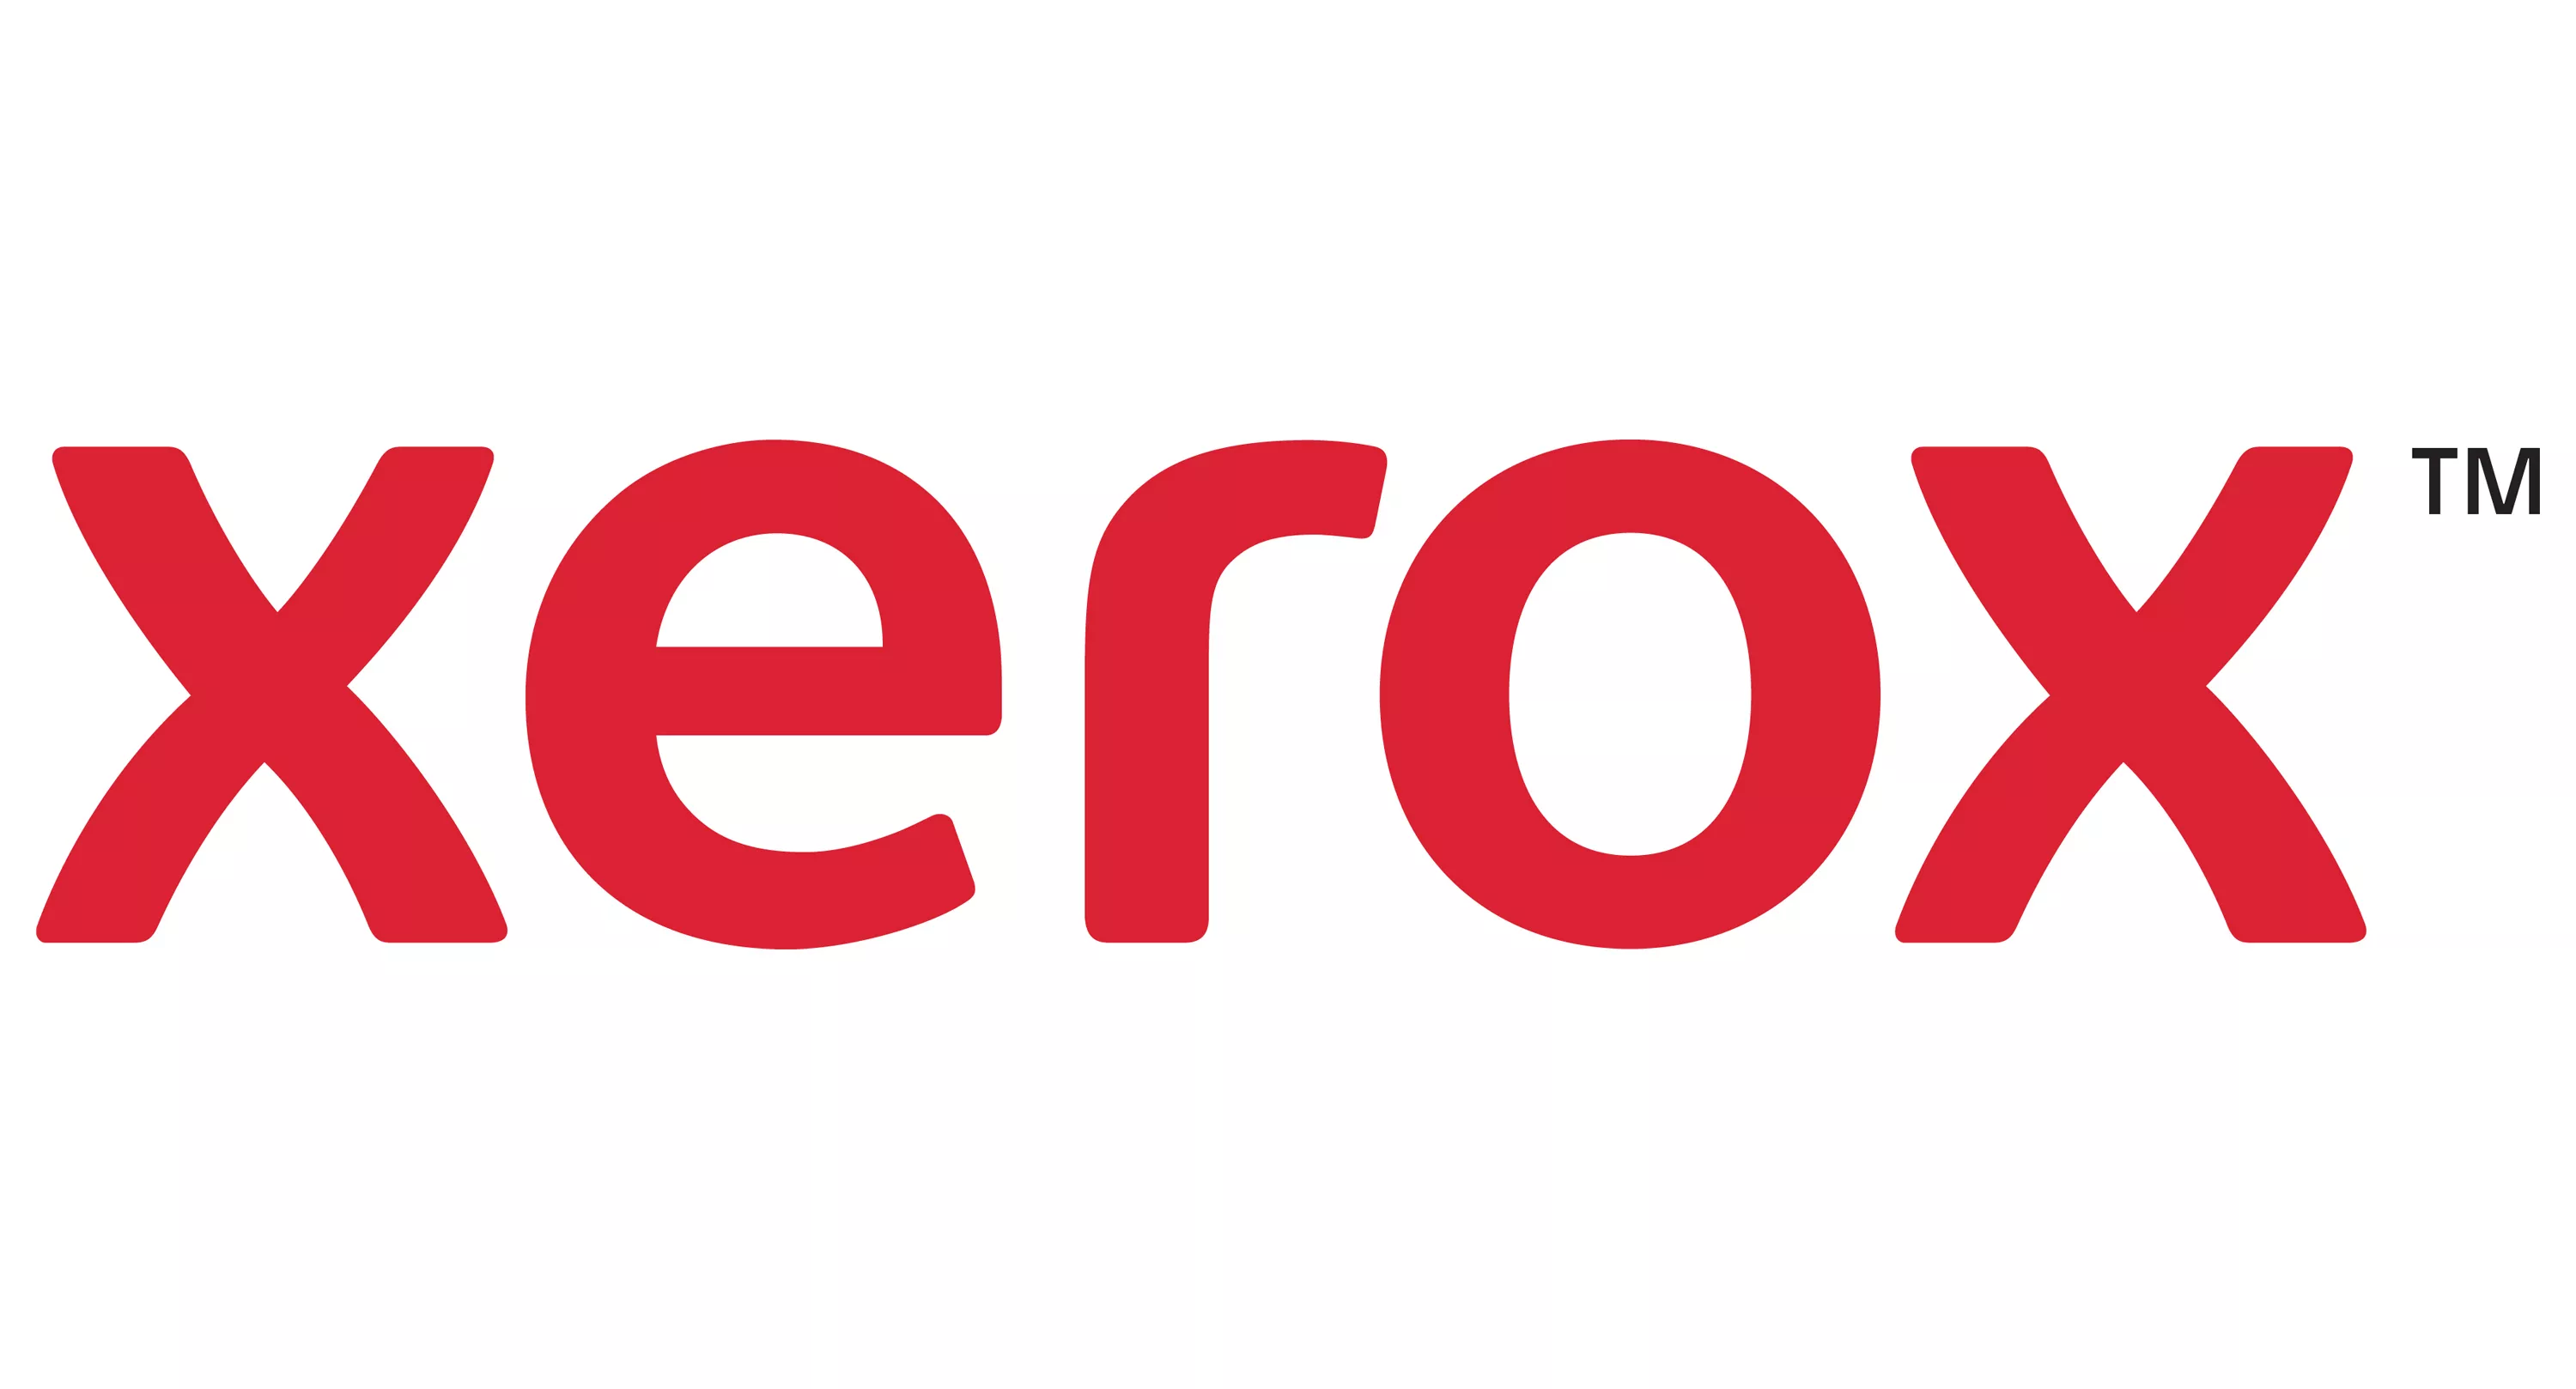 Vente Xerox Toner Everyday Noir compatible avec Lexmark 50F2X00 Xerox au meilleur prix - visuel 2